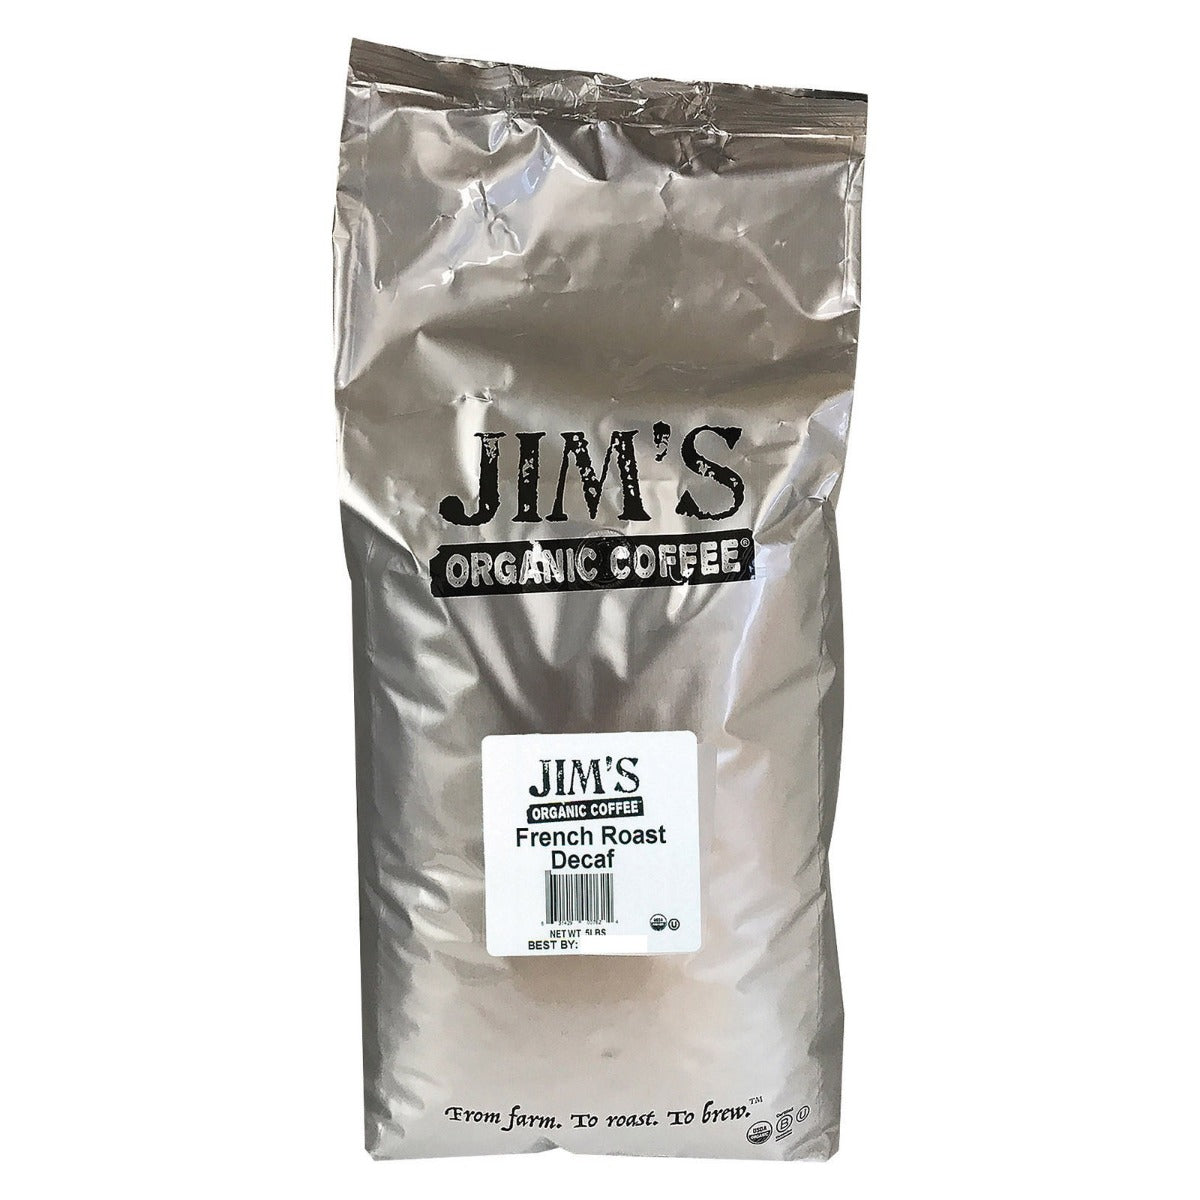 JIMS ORGANIC COFFEE: Organic French Roast Decaf Coffee, 5 lb - Vending Business Solutions